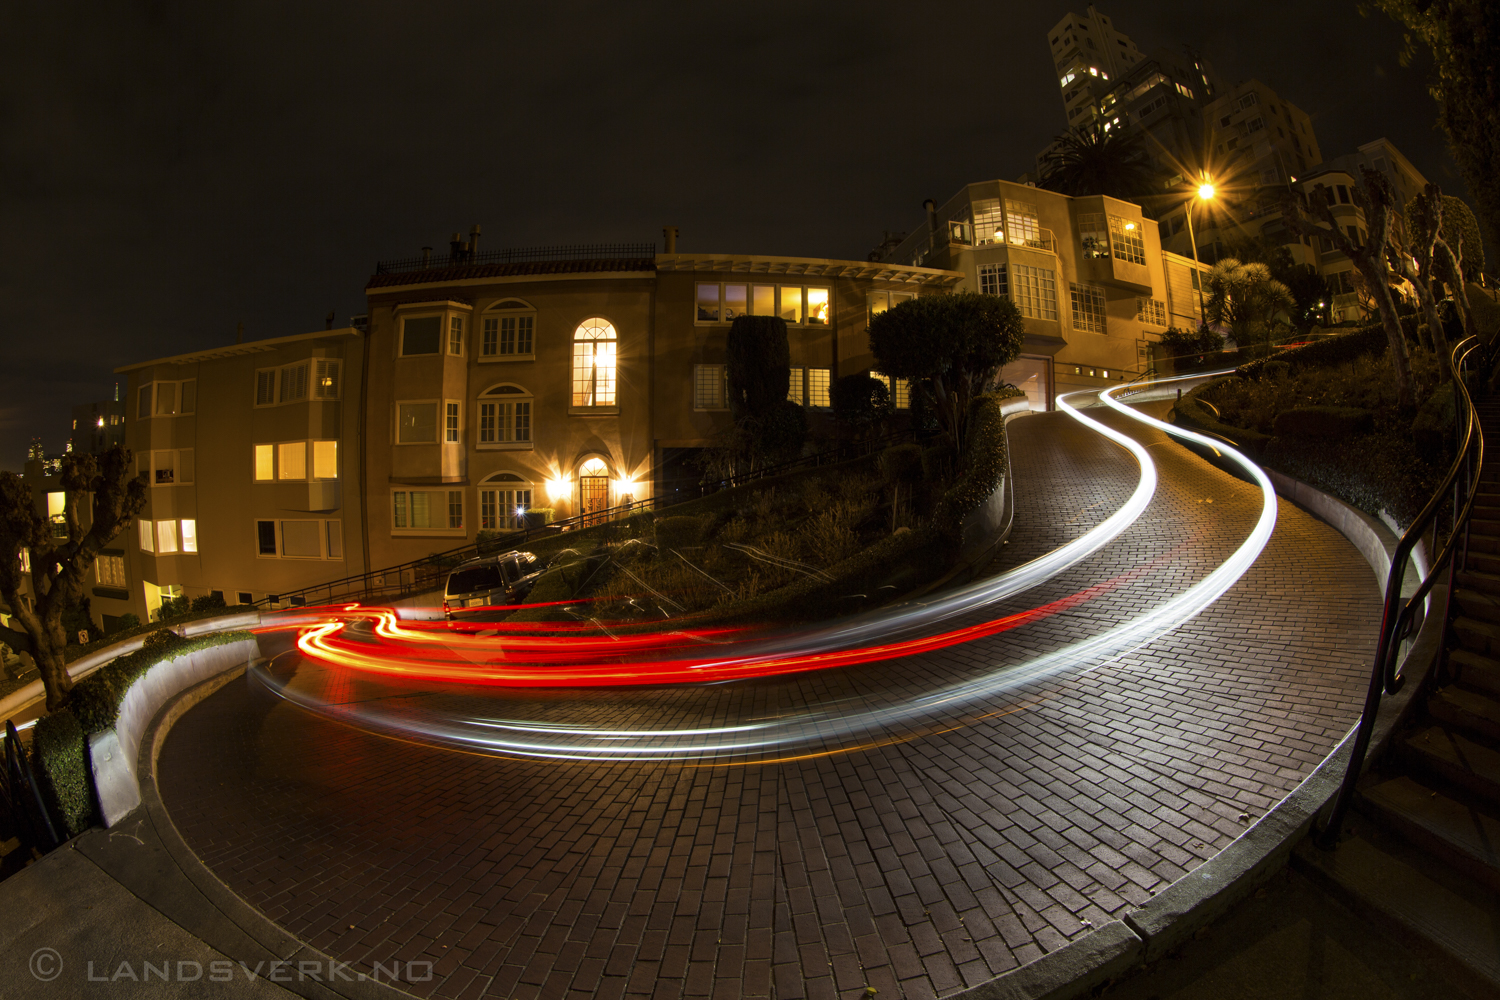 Lombard Street. San Francisco, California. 

(Canon EOS 5D Mark III / Canon EF 8-15mm f/4 L USM Fisheye)